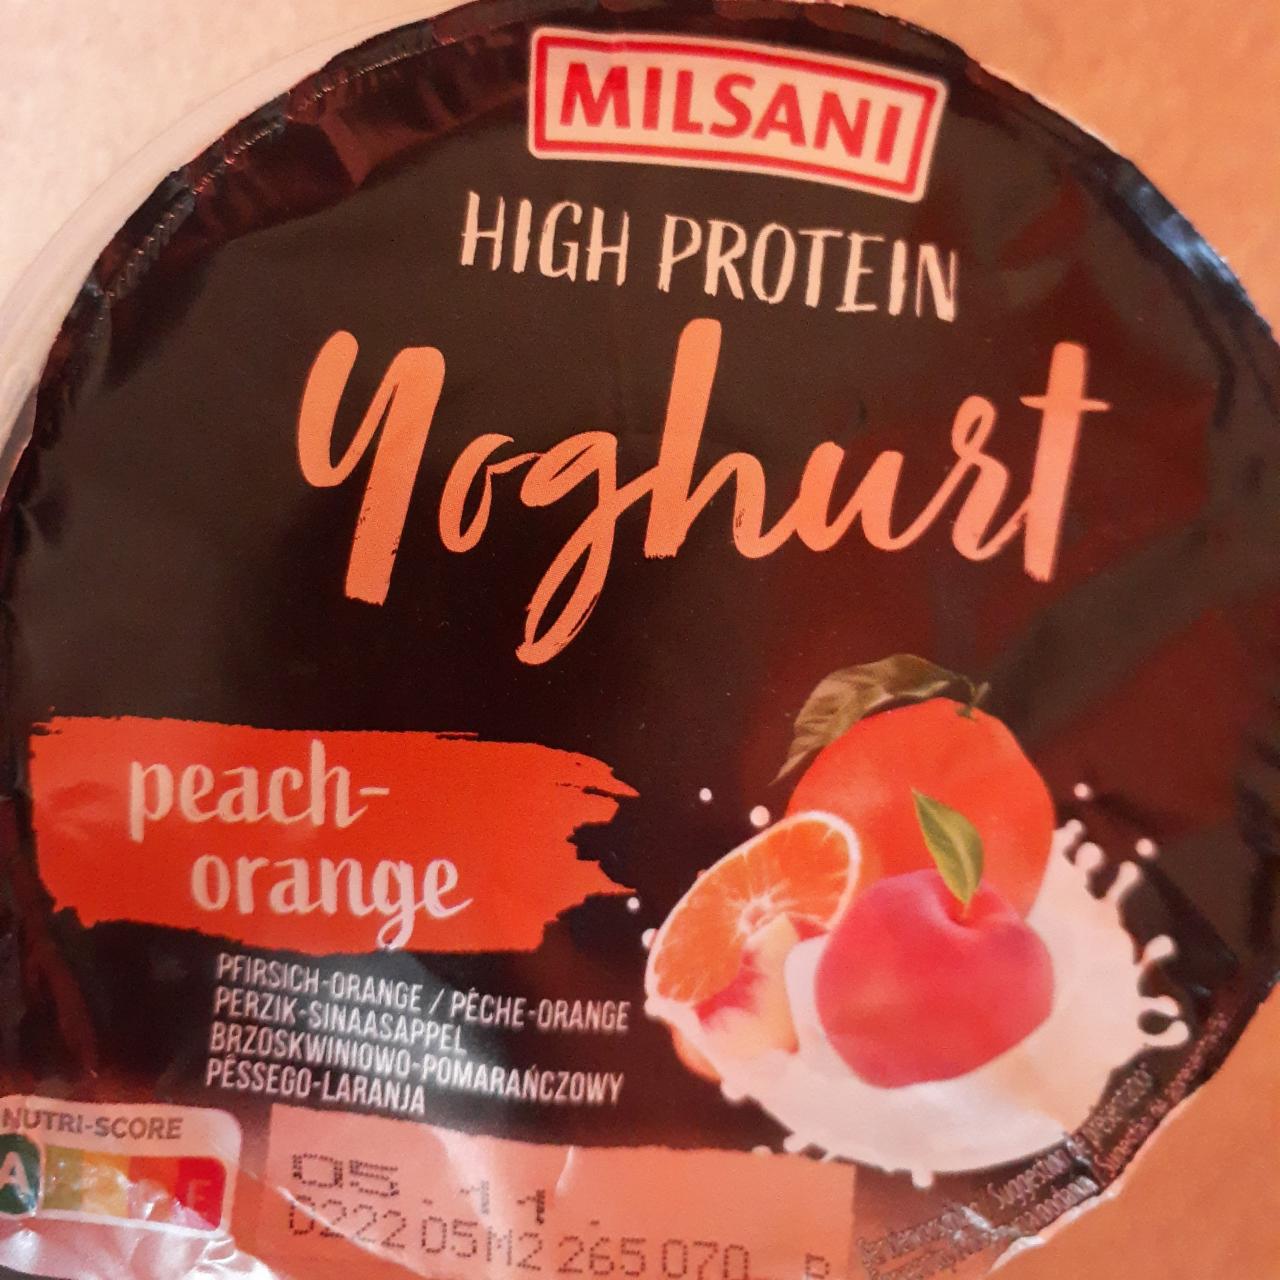 Zdjęcia - High protein Yoghurt peach-orange Milsani